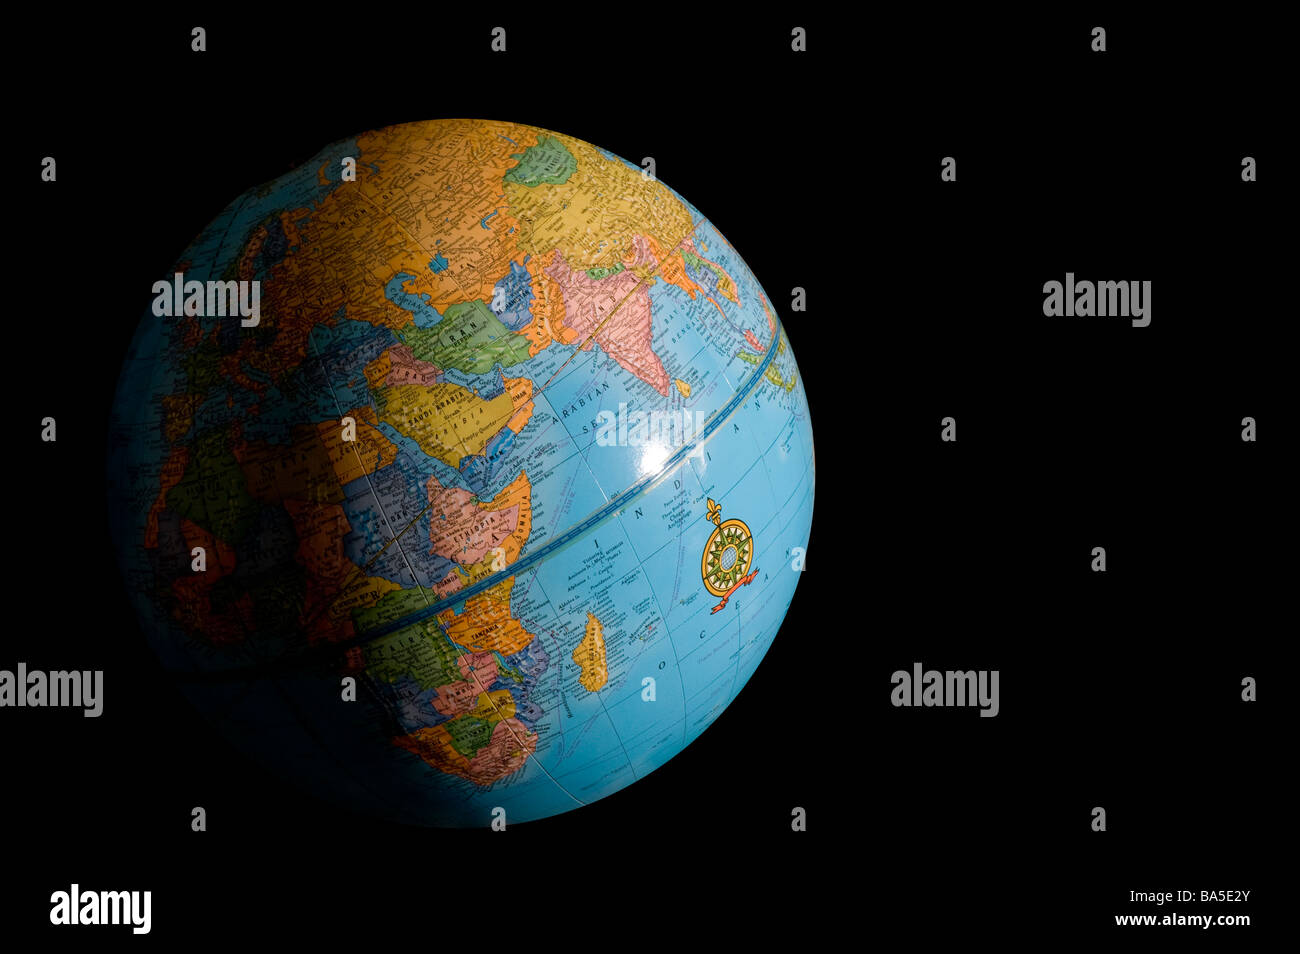 globe showing Indian Ocean and Arabian Sea Stock Photo